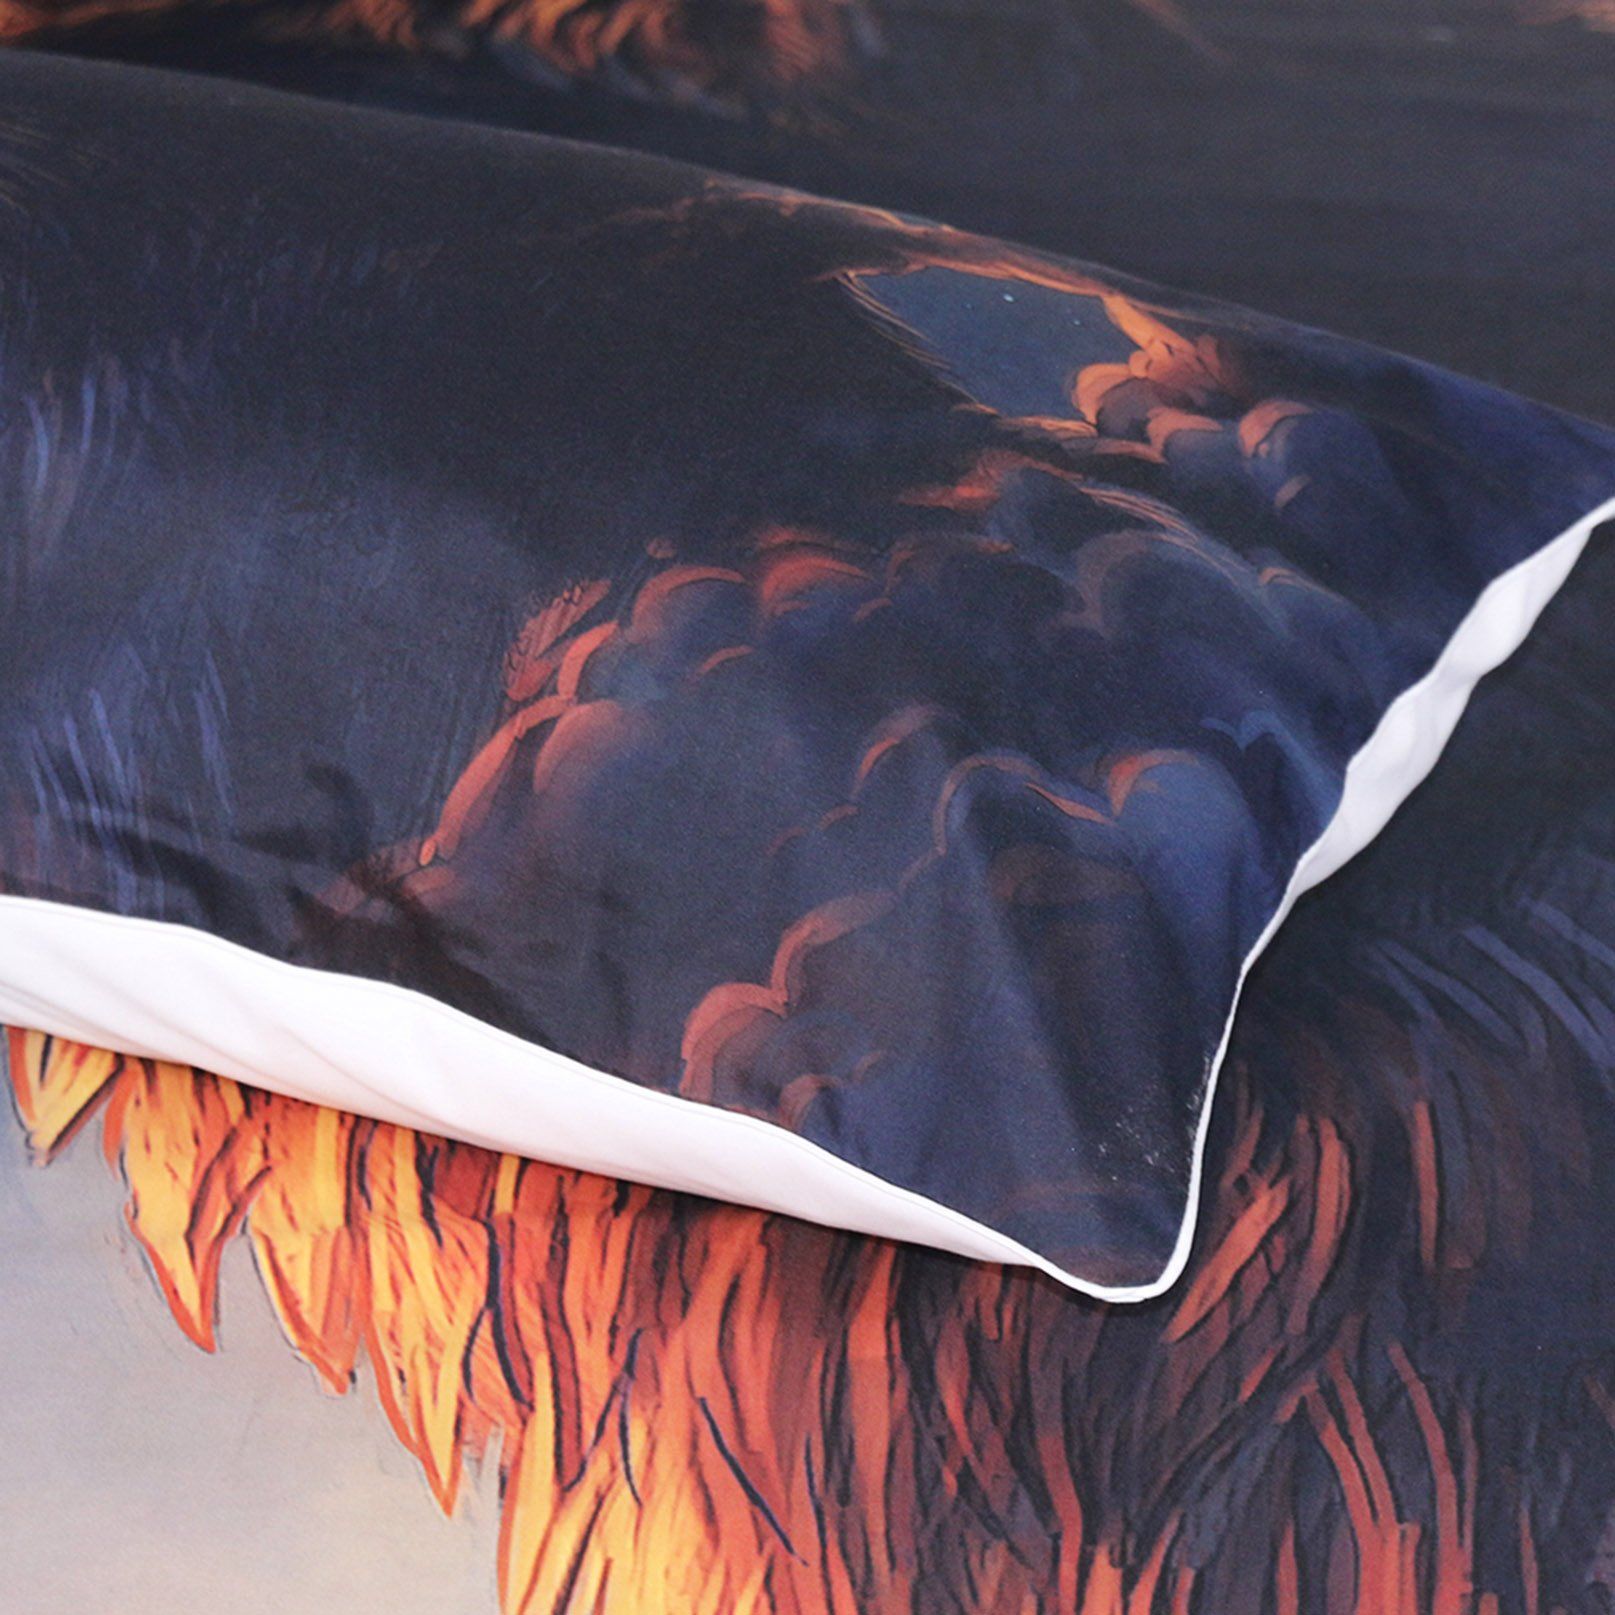 3D Night Wolf 218 Bed Pillowcases Quilt Wallpaper AJ Wallpaper 